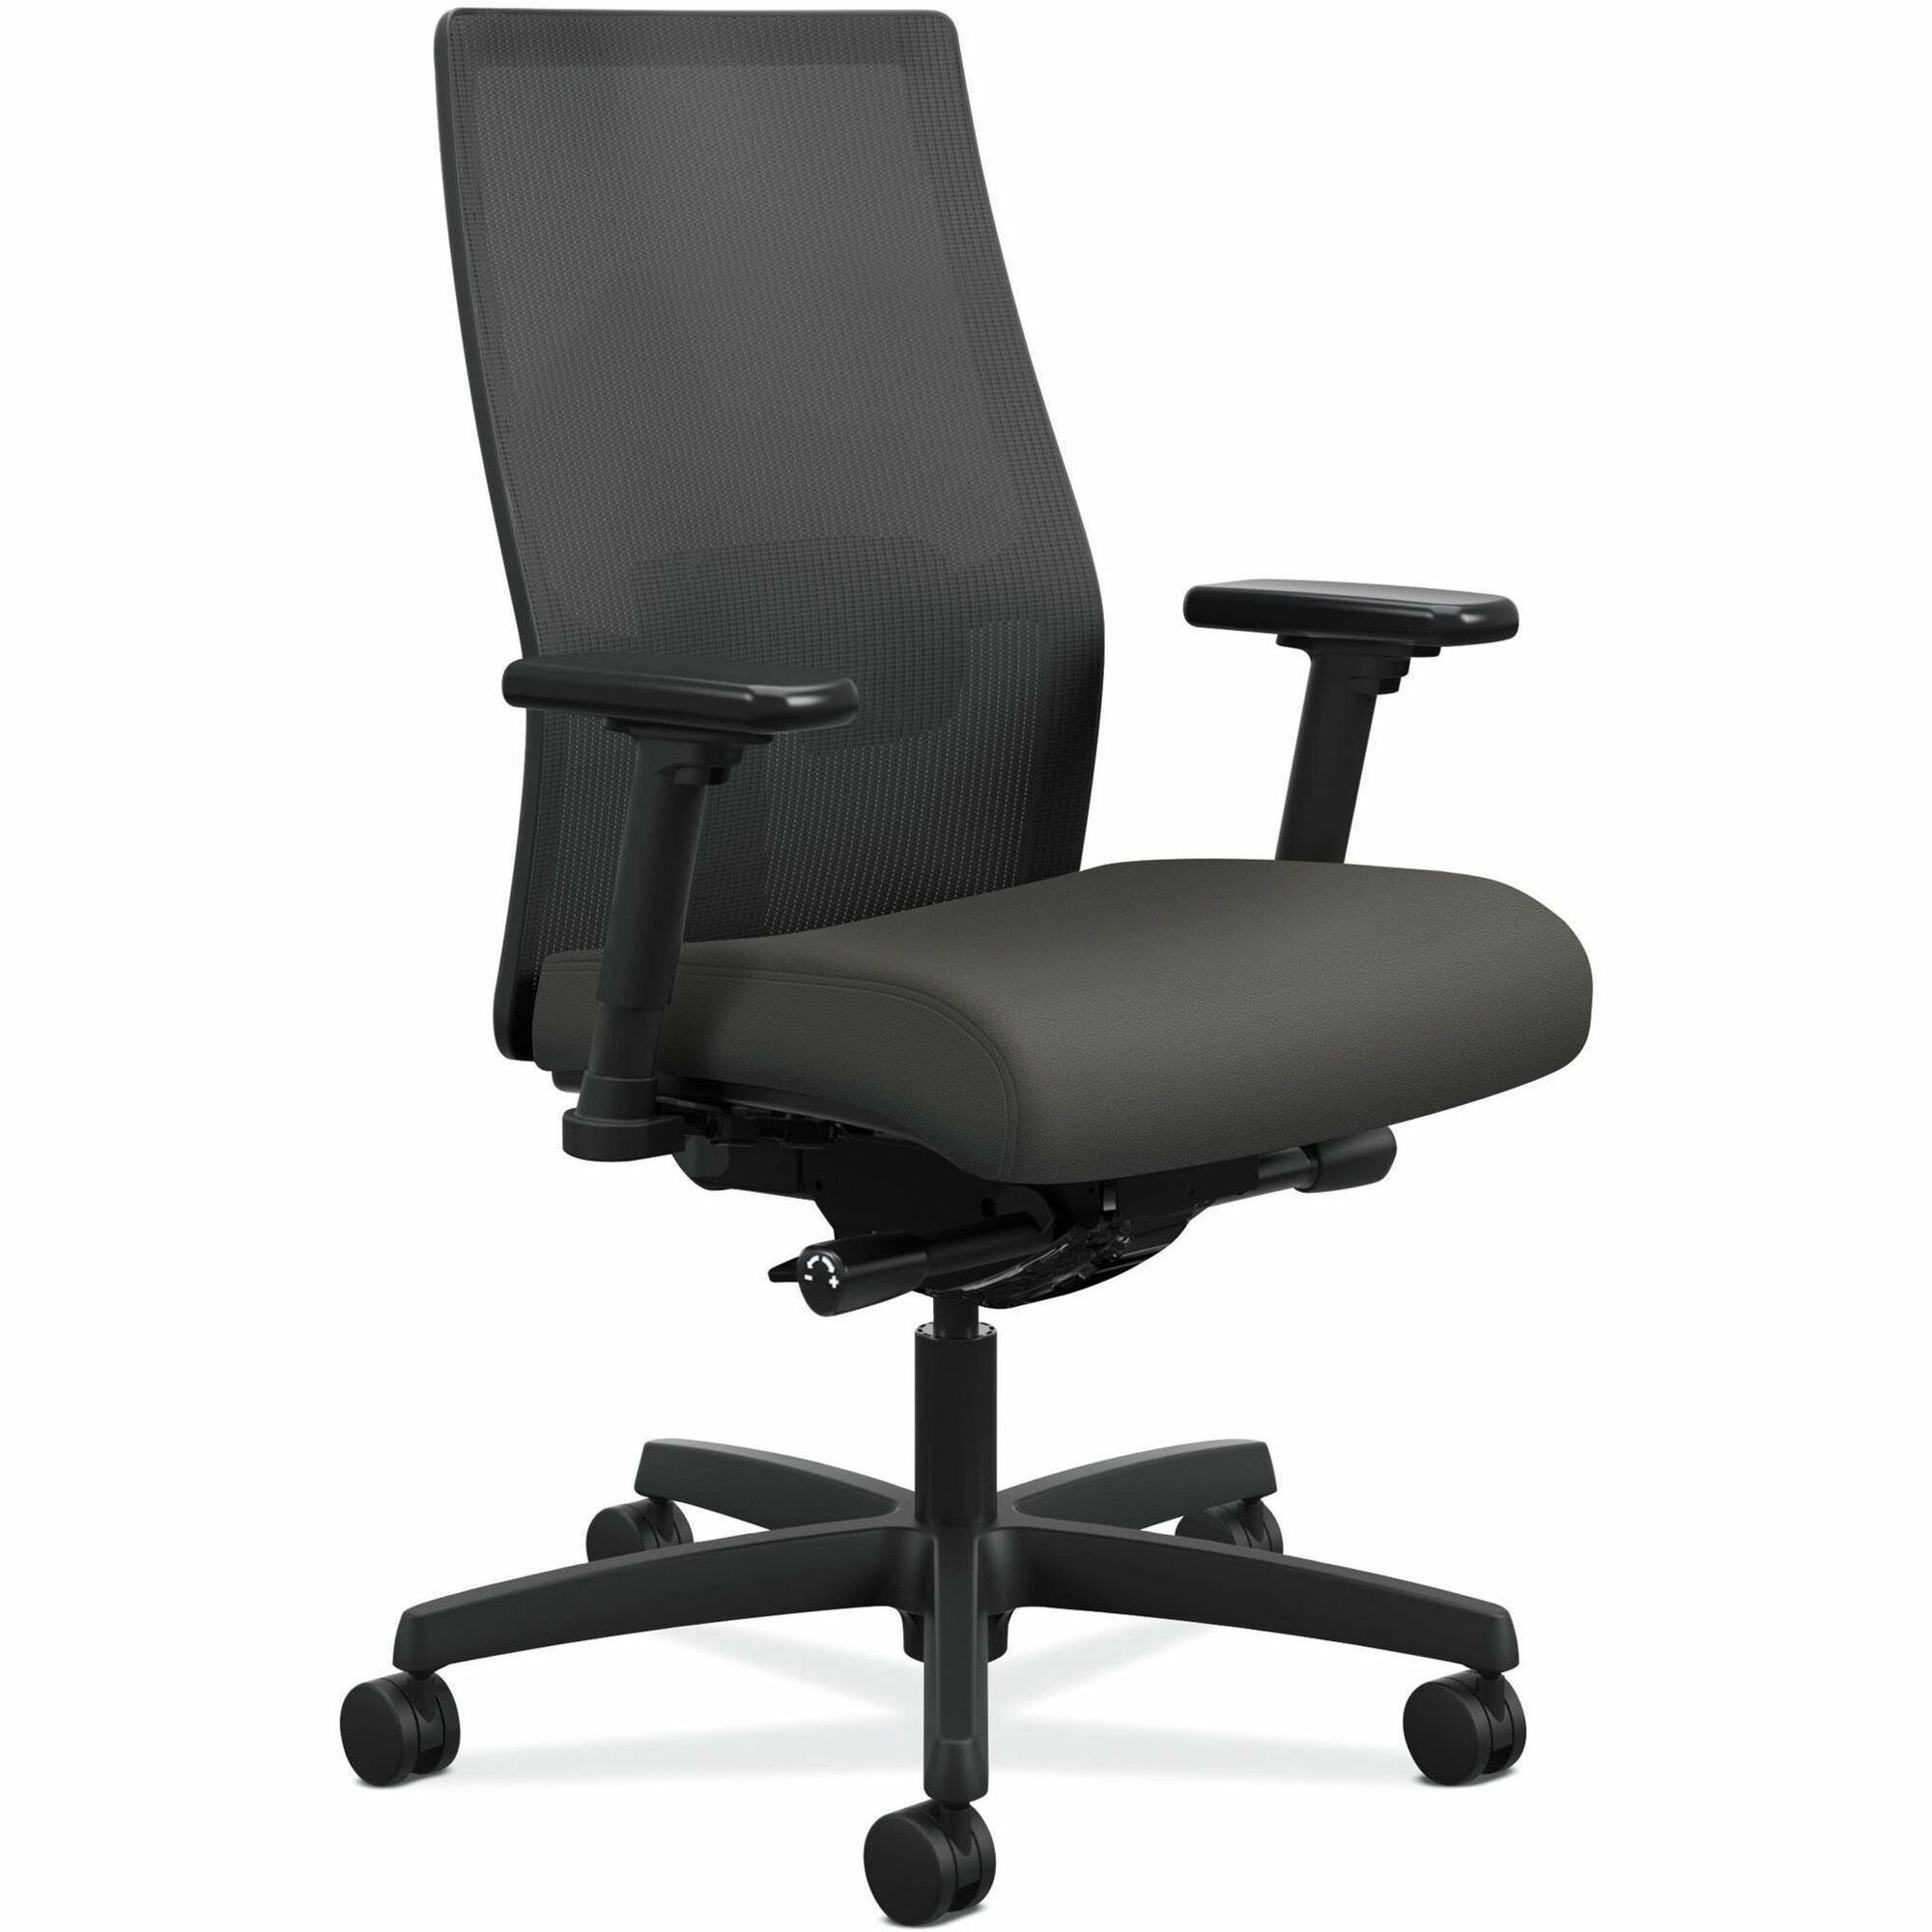 hon-ignition-black-mesh-back-chair-fabric-seat-iron-ore-fabric-polyurethane-seat-black-mesh-back-black-frame-mid-back-5-star-base-1-each_honiwmmkd2mc19b - 1